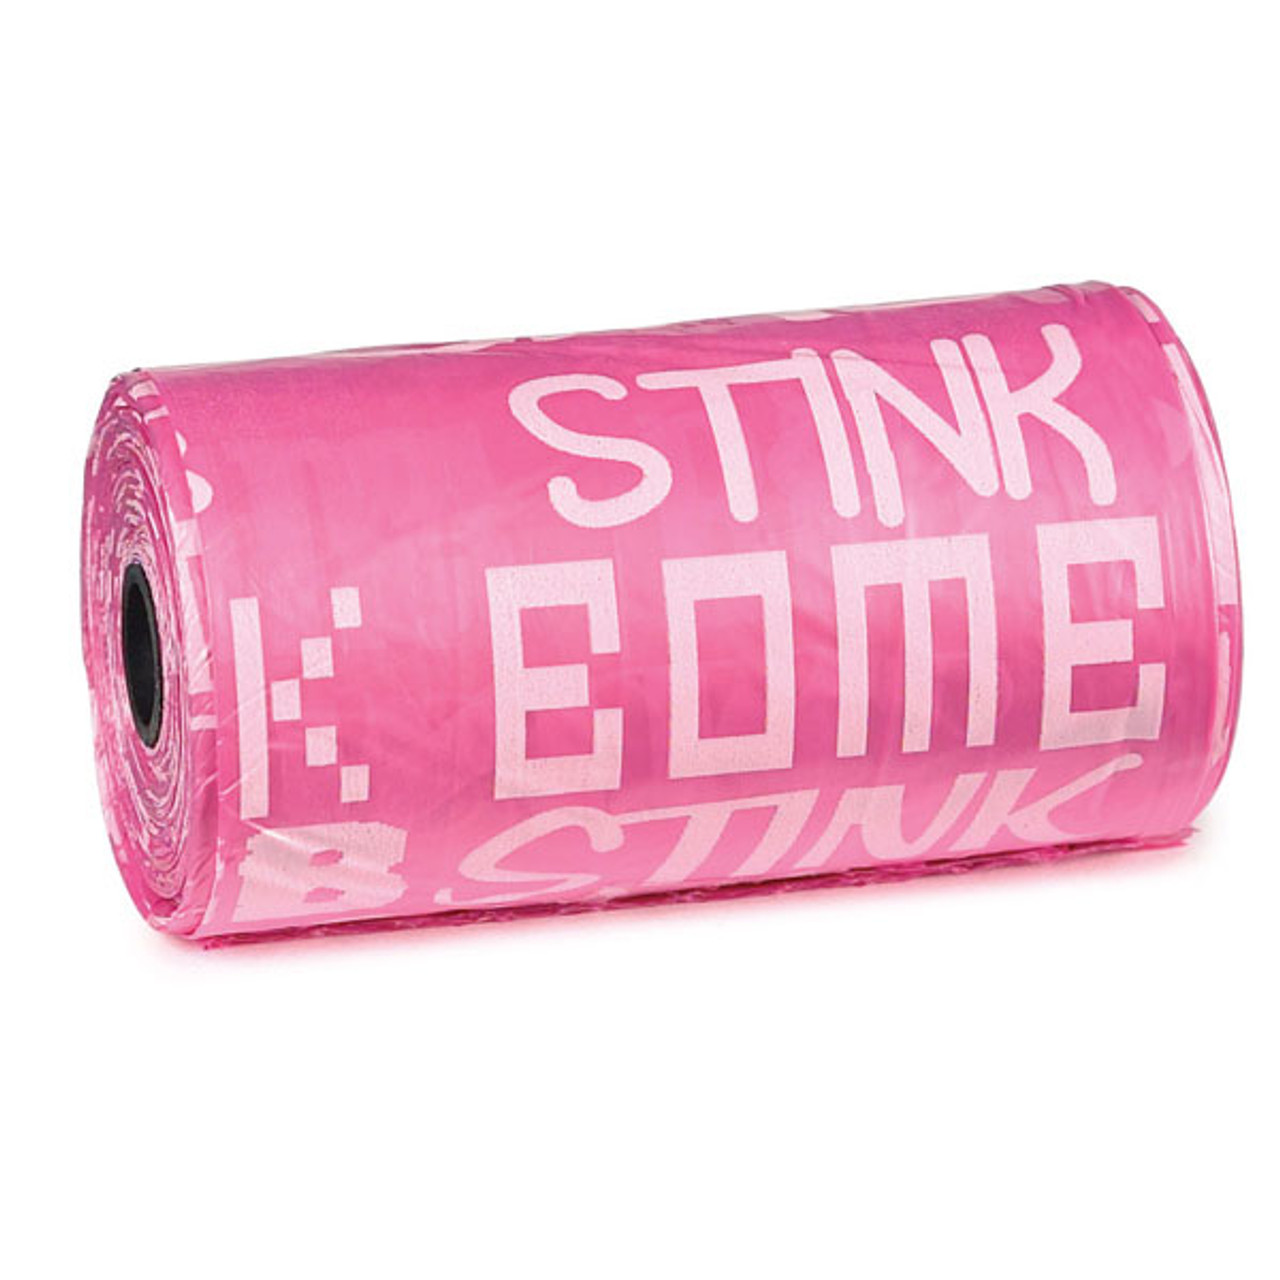 "Stink Bomb"